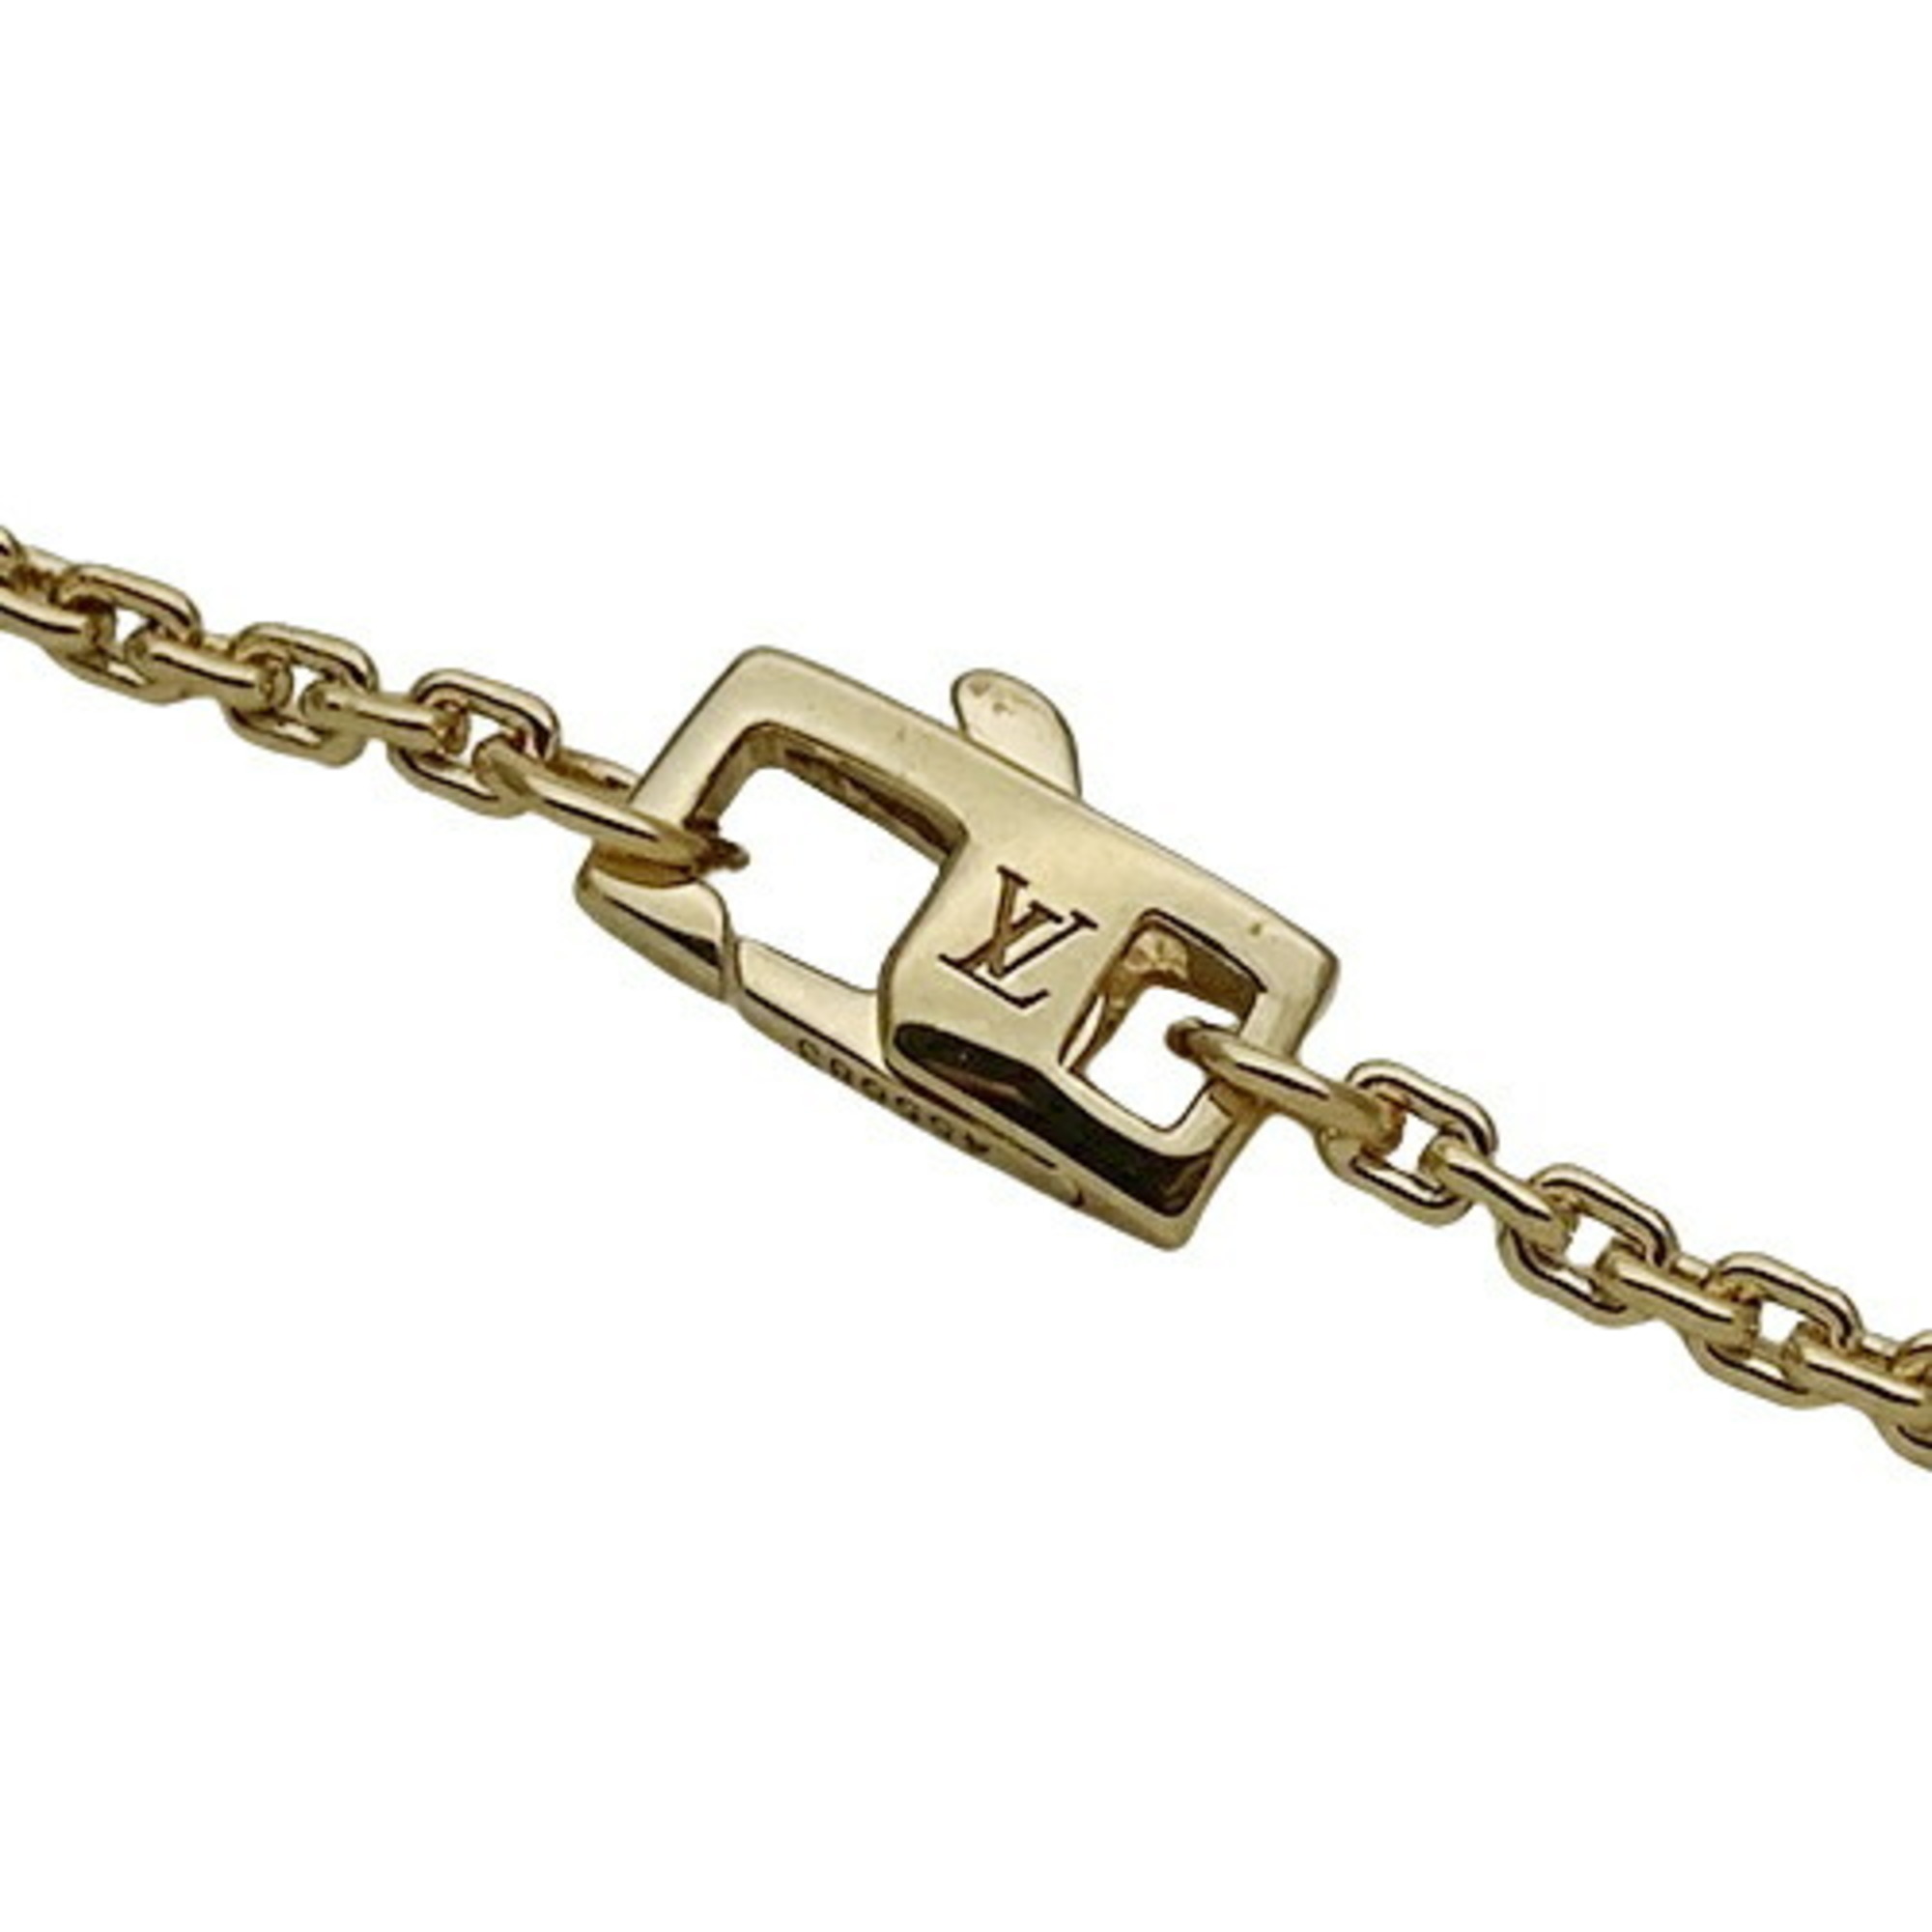 LOUIS VUITTON Bracelet for Women 750YG Diamond Idylle Blossom LV Yellow Gold Q95561 Polished